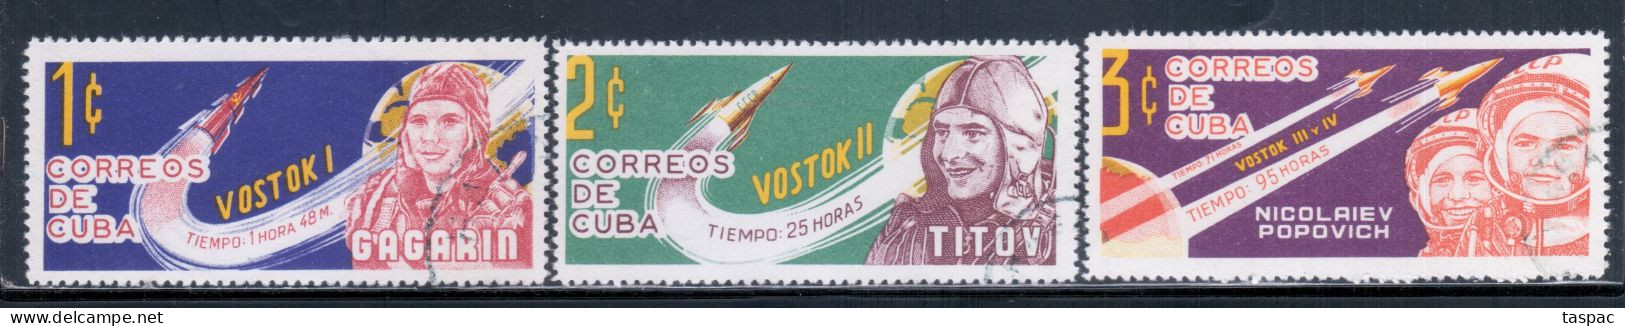 Cuba 1963-64 Mi# 835-837 Used - Soviet Space Flights / Cosmonauts (I) - Usados